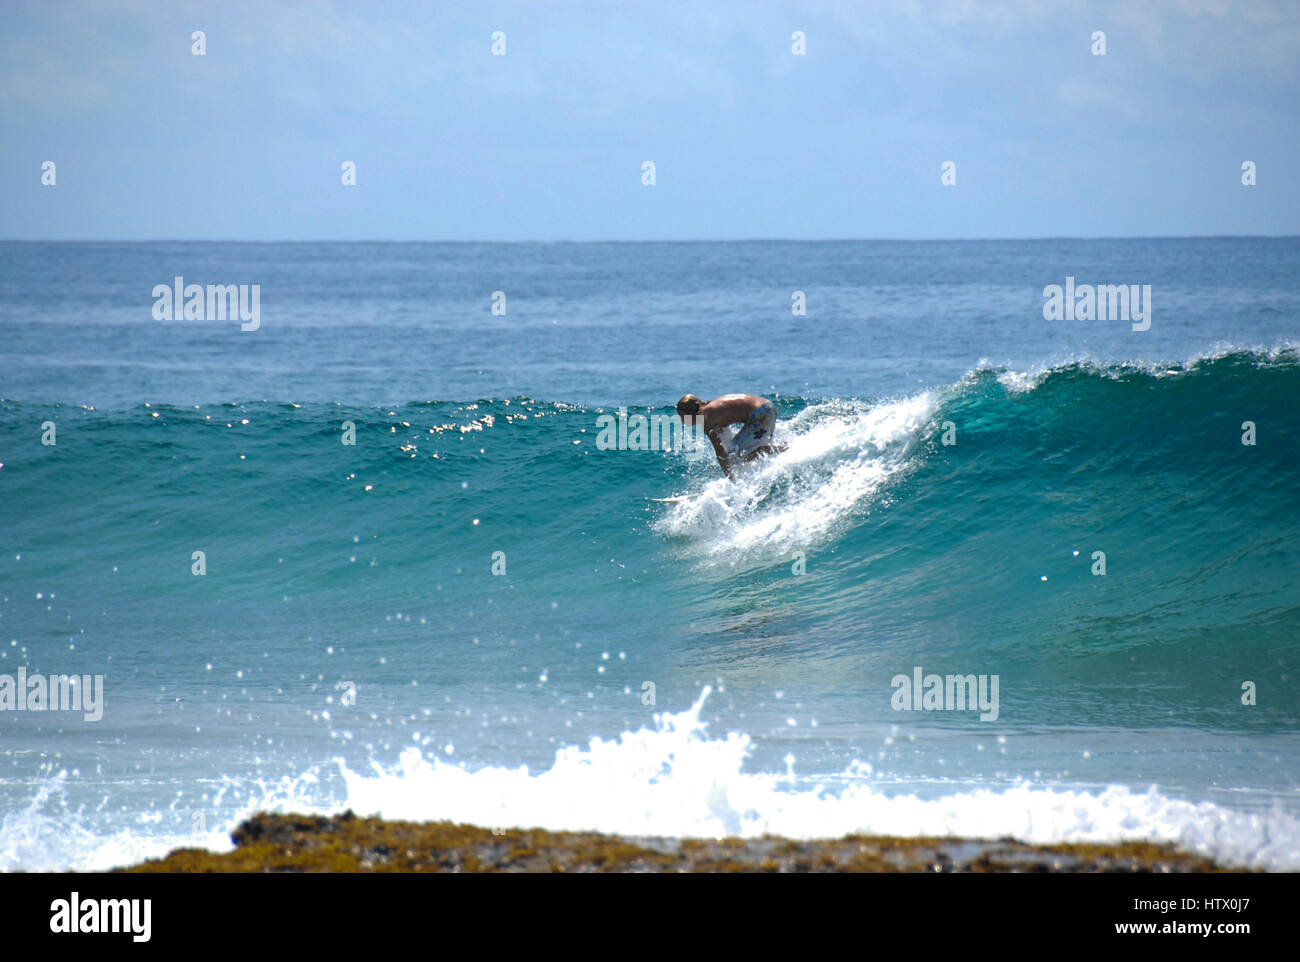 Surfer riding waves, Ponta Do Ouro, Mozambique Stock Photo